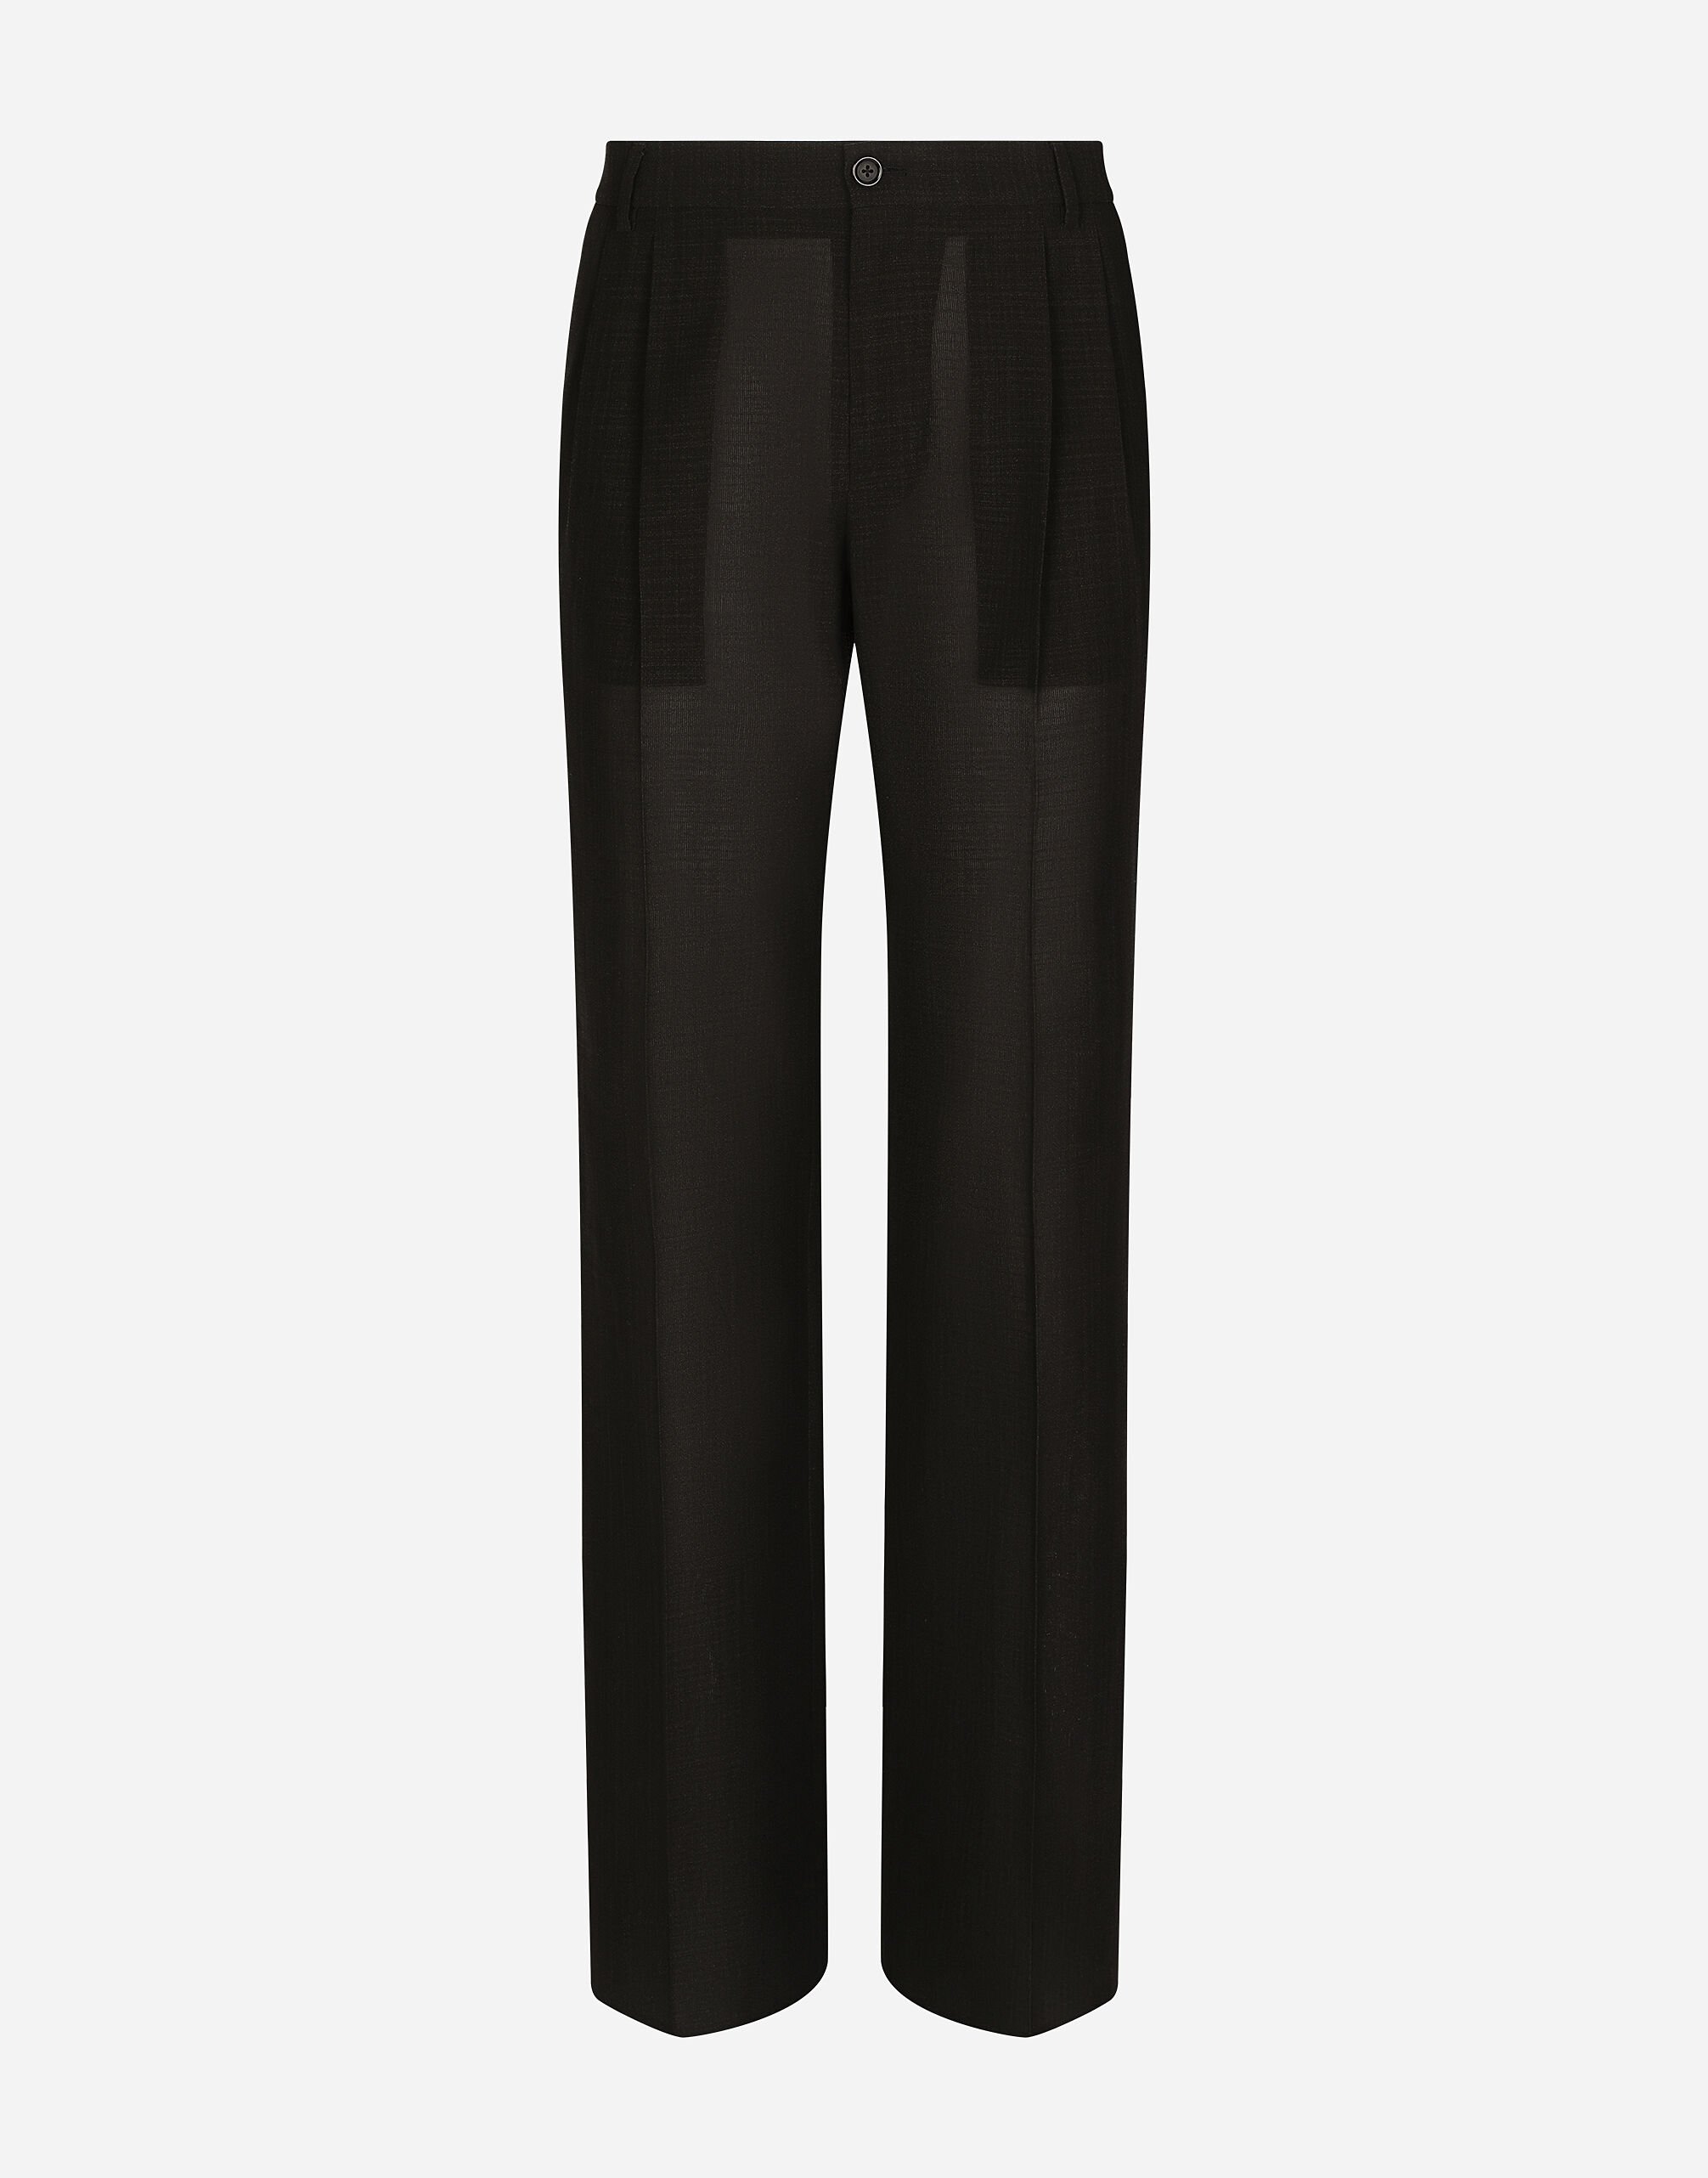 Dolce & Gabbana سروال محبوك بساق مستقيمة من قطني تقني متعدد الألوان GV1CXTFU4KJ